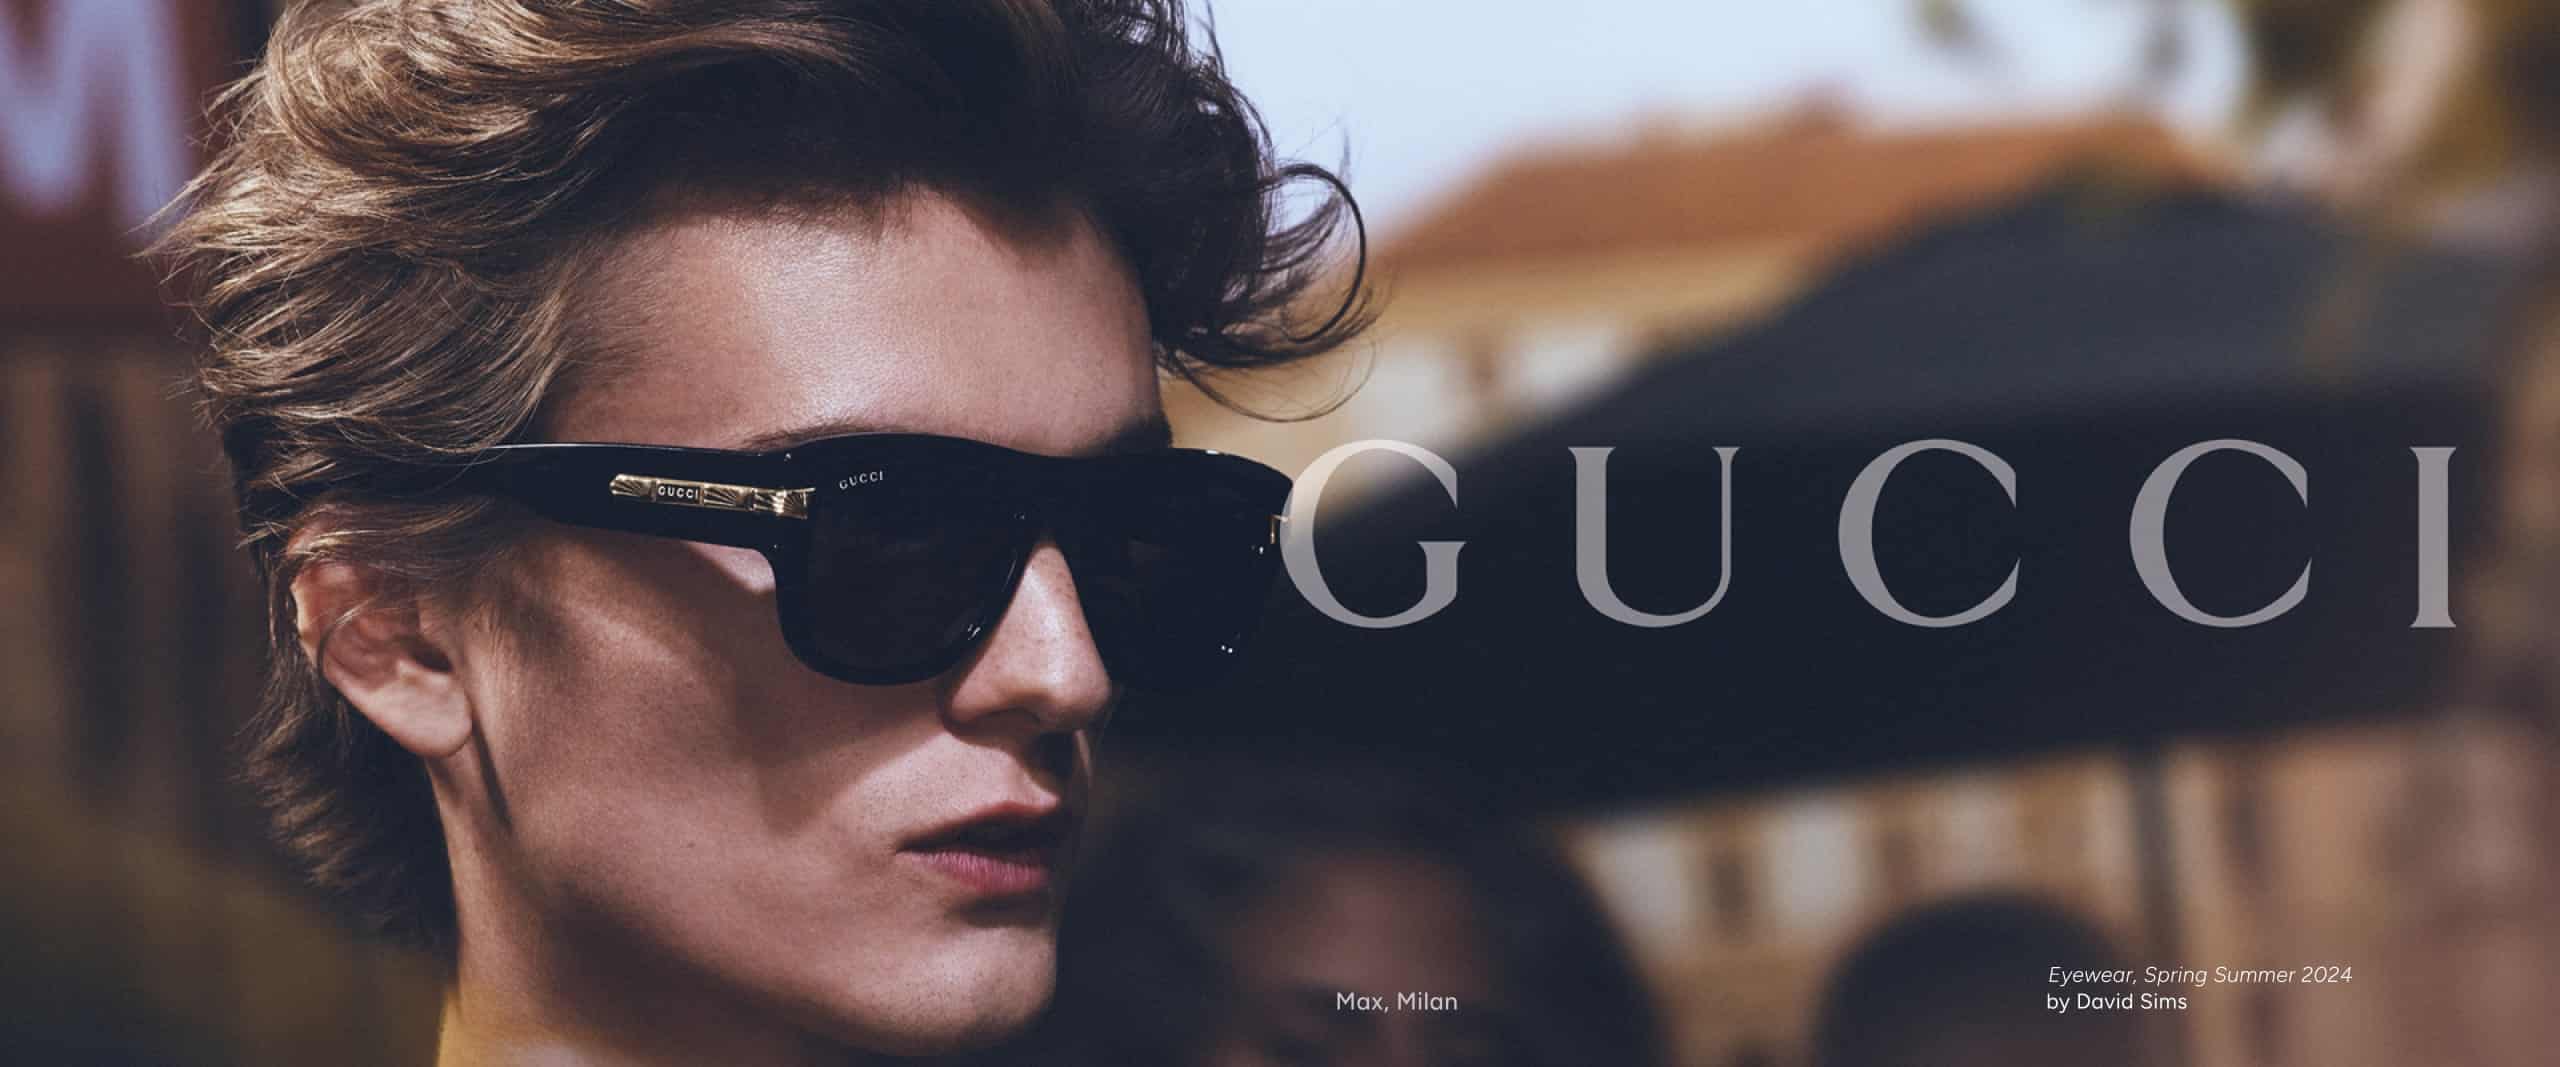 Gucci Sunglasses 3 Collection Image